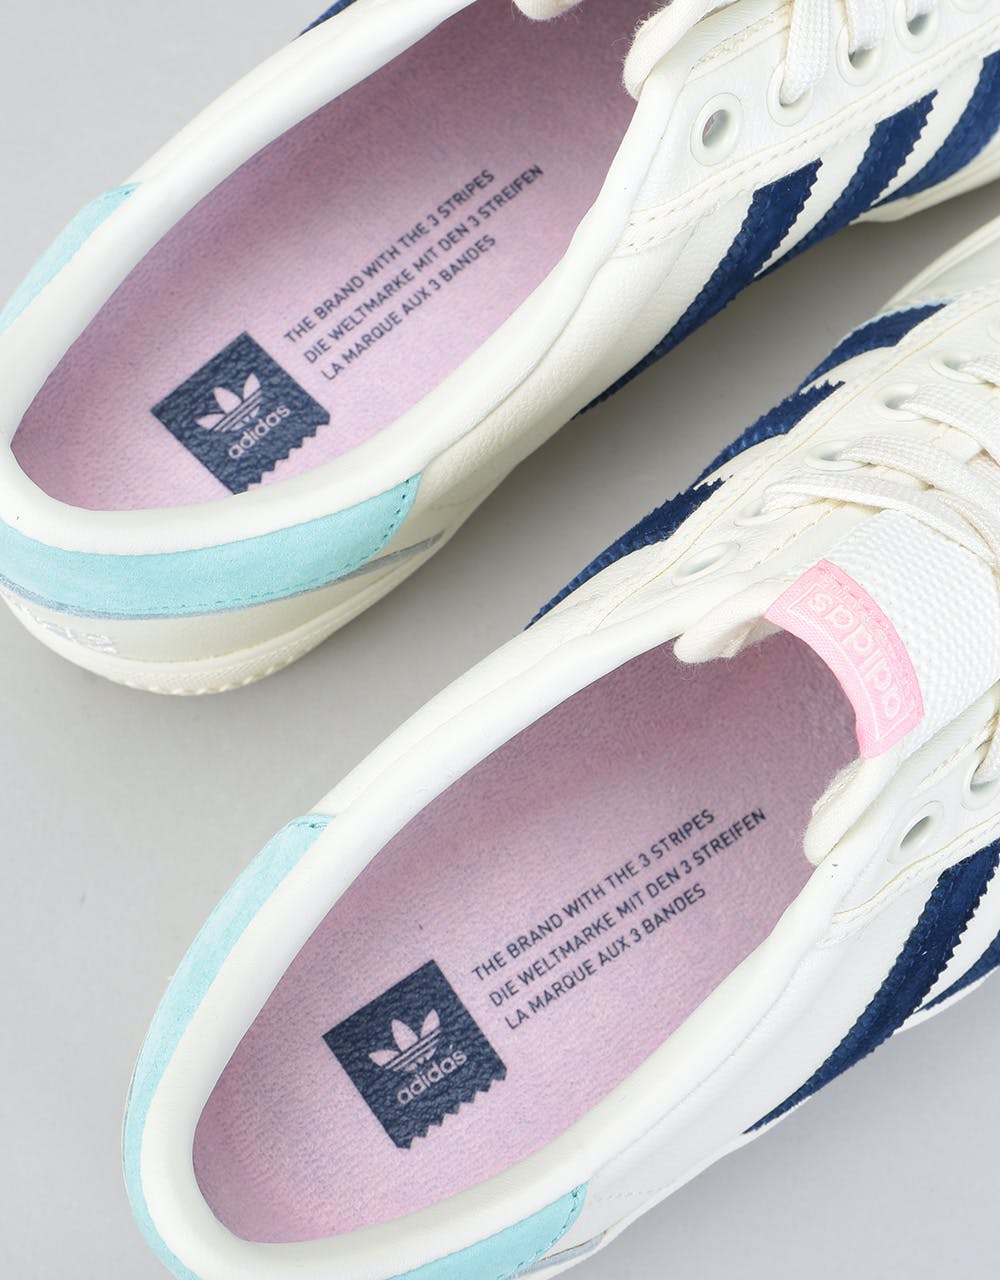 Adidas x Hélas Lucas Premiere Skate Shoes - Off White/Dark Blue/Aqua